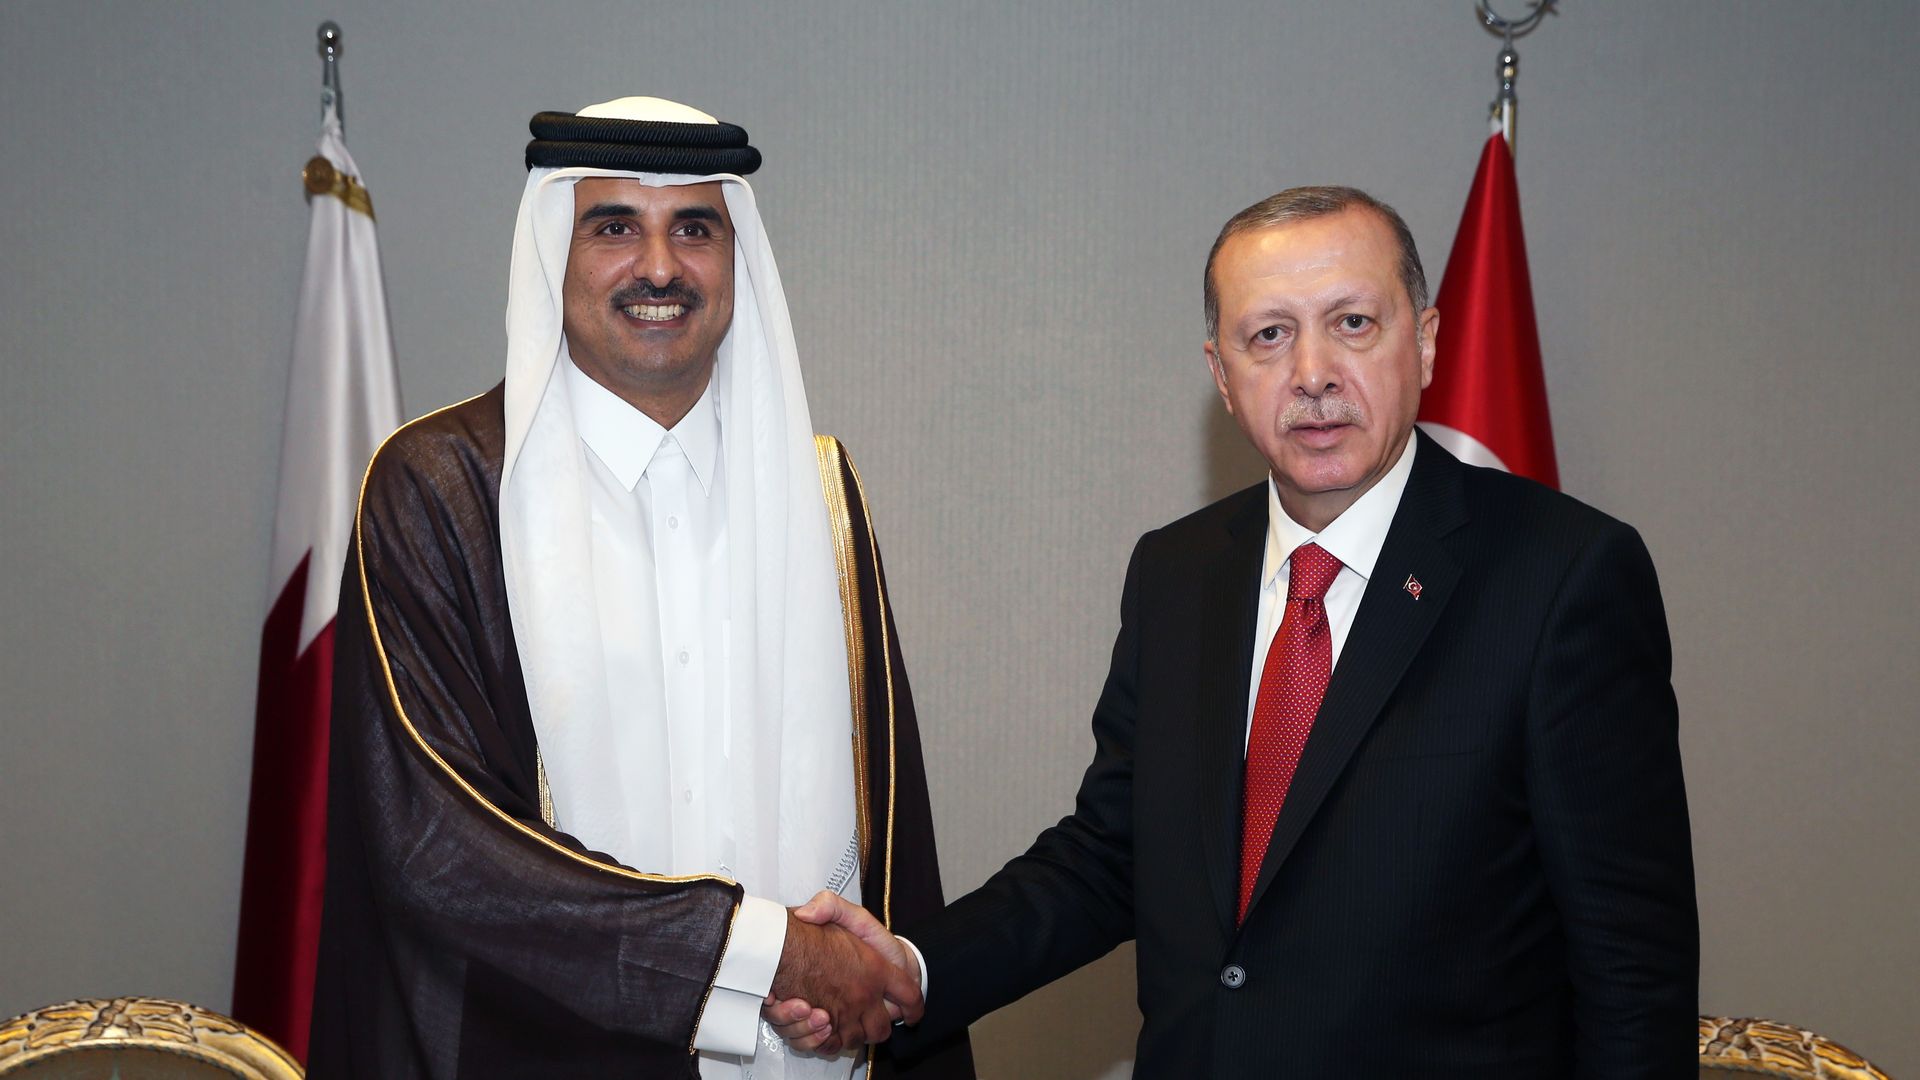 Qatar's emir and Turkey's president shaking hands